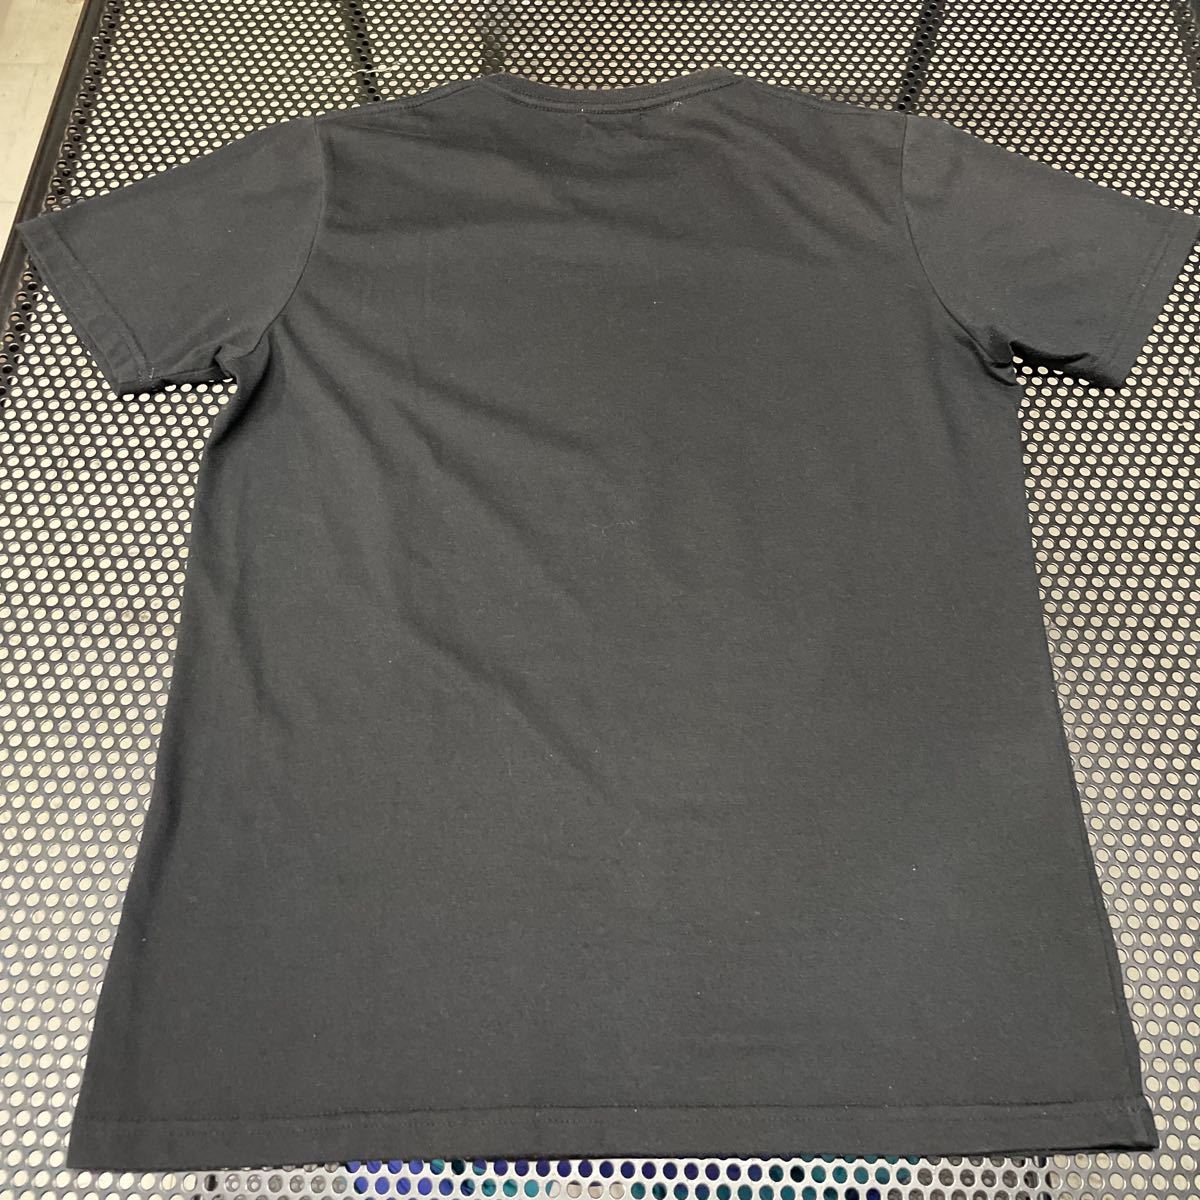  Takeo Kikuchi TAKEOKIKUCHI short sleeves print T-shirt black black L size 